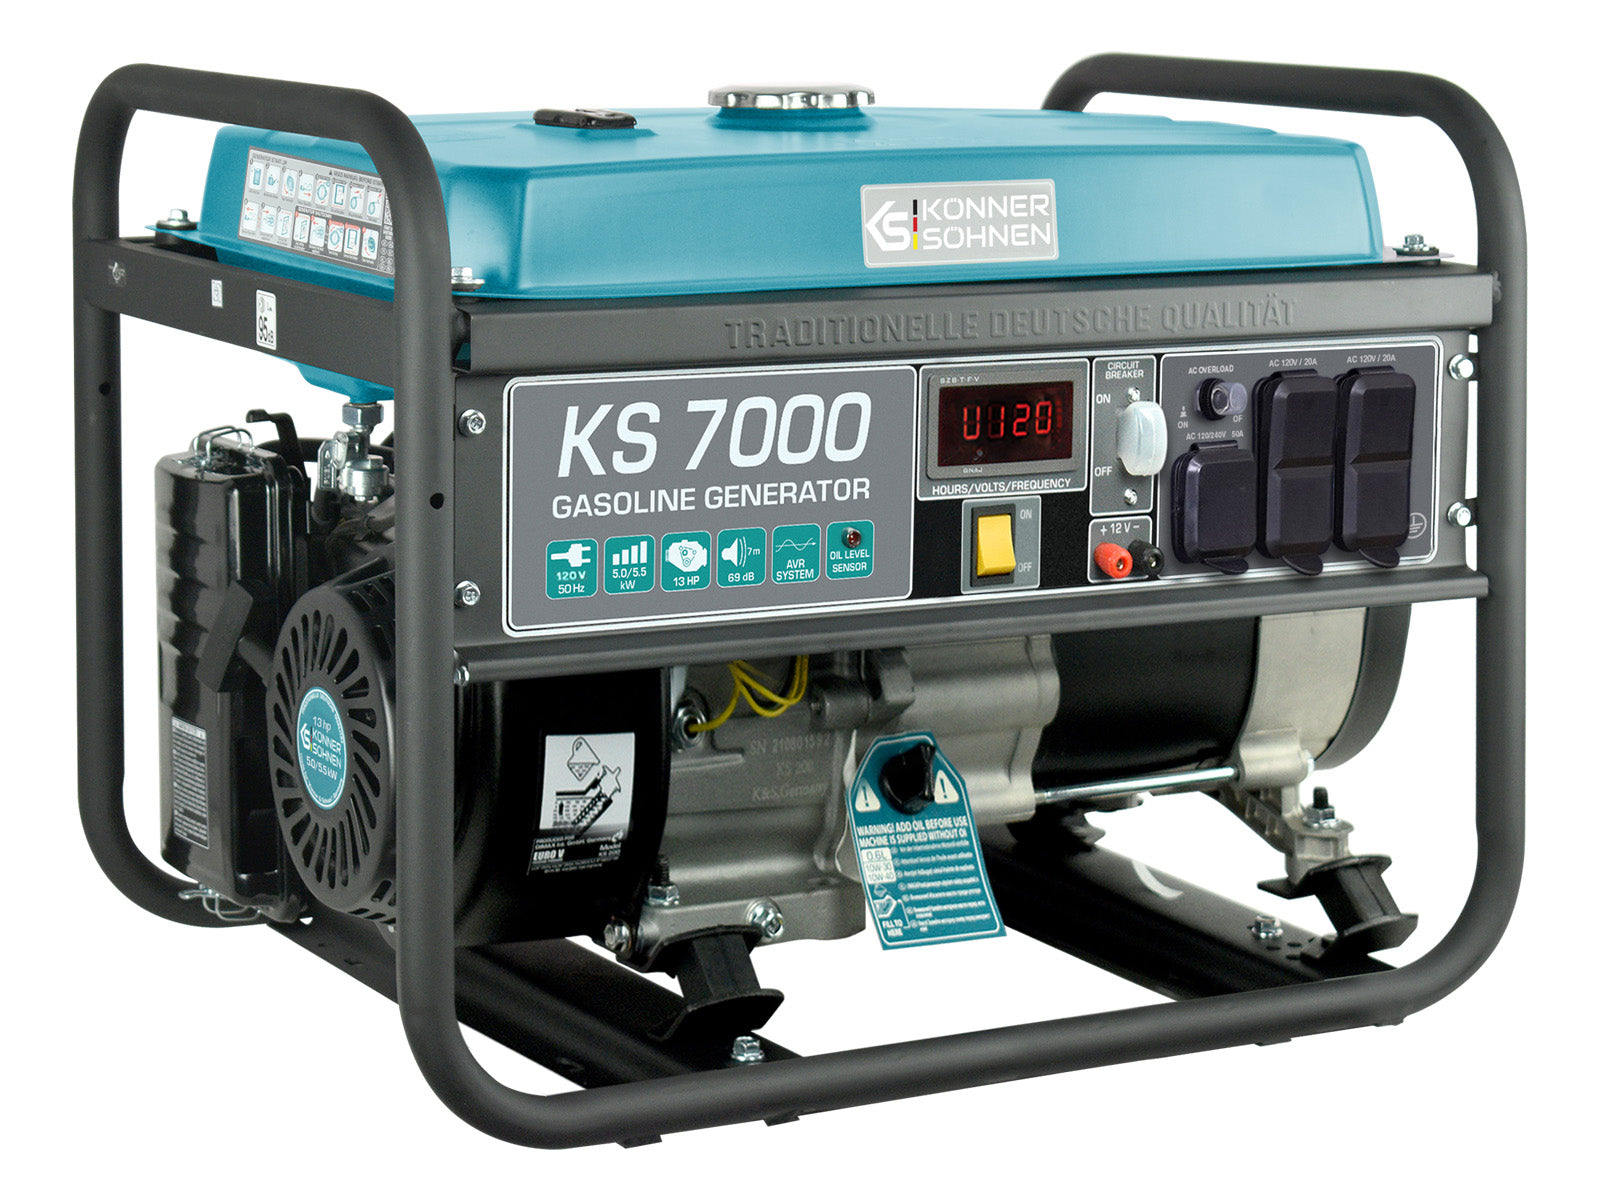 Gasoline generator KS 7000